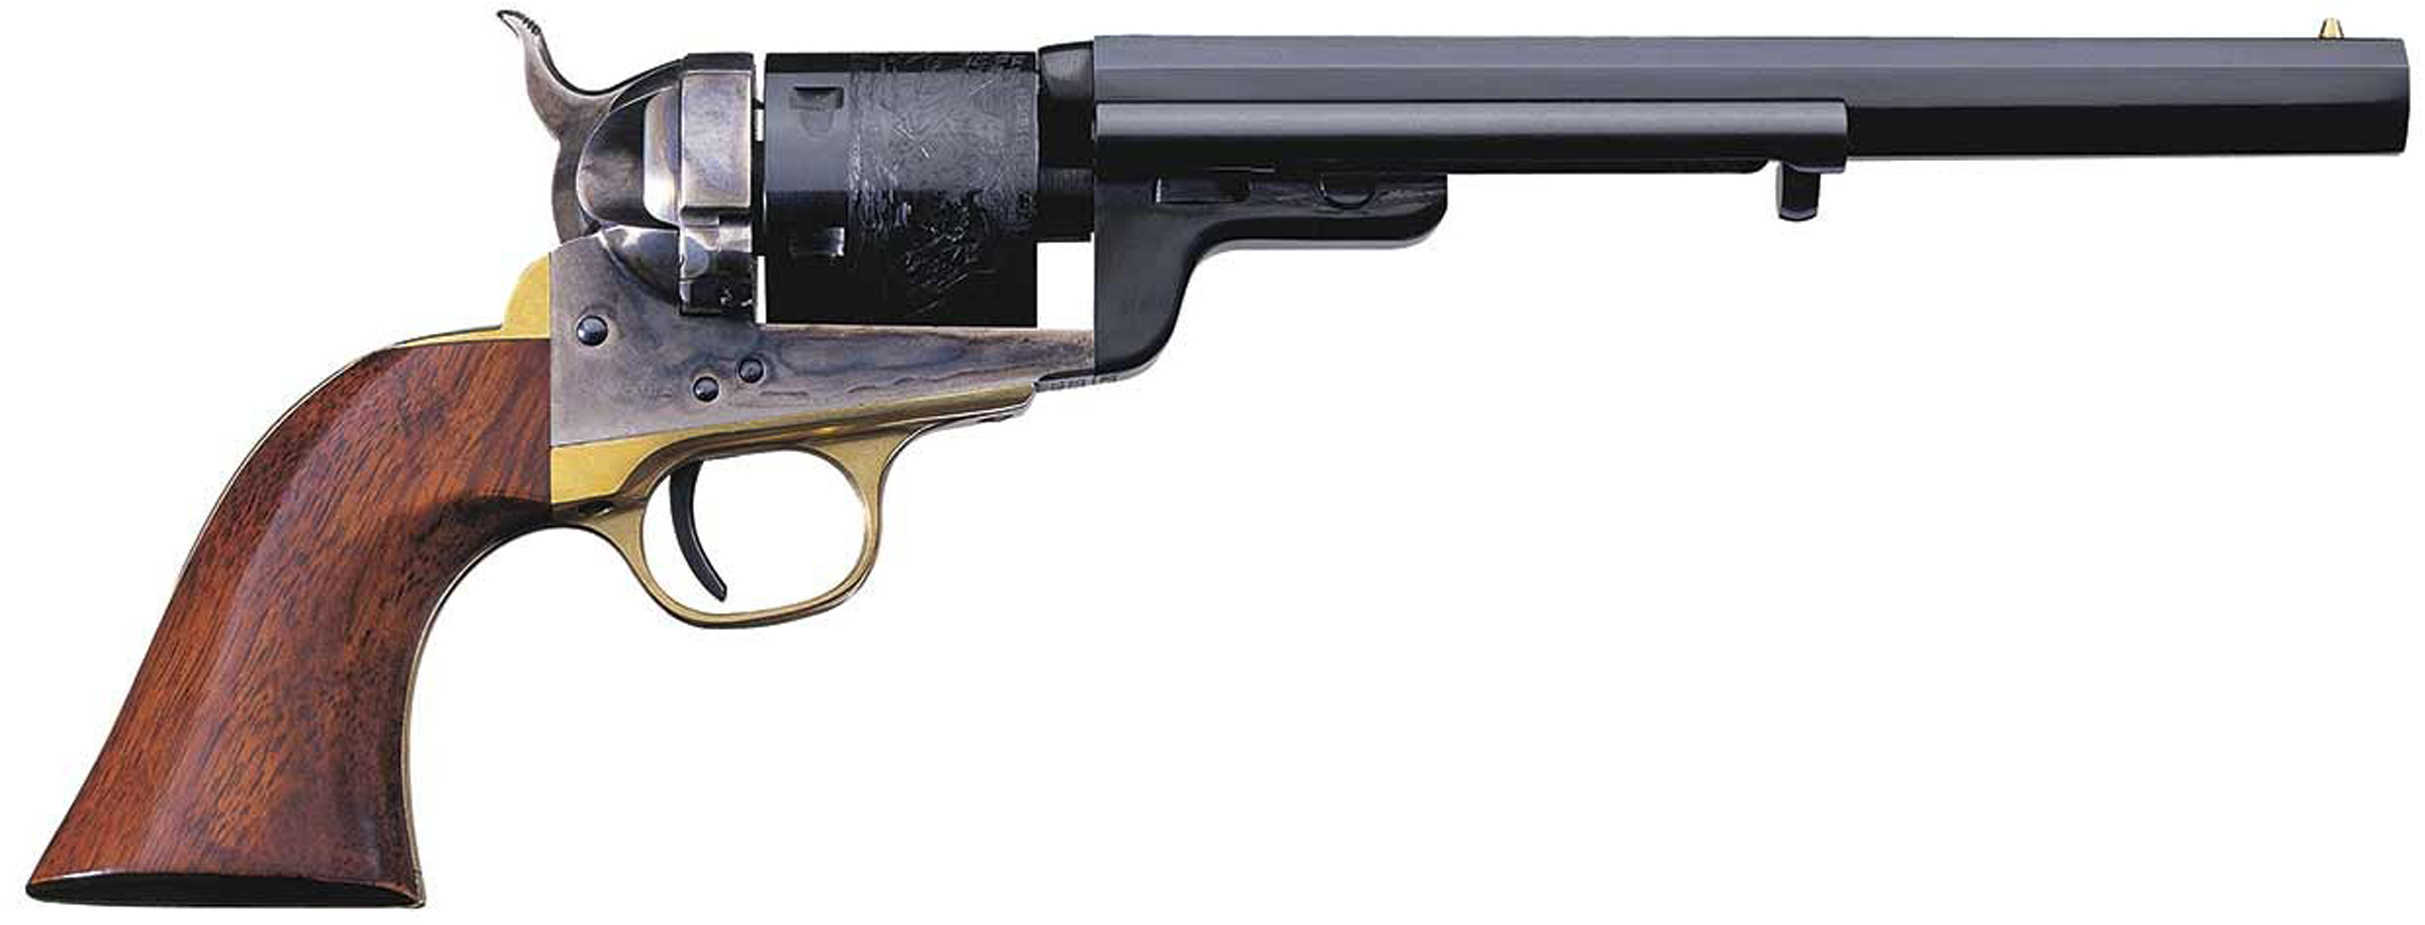 Taylor's & Company 1851 Navy 38 Special Octagonal 4.75" Barrel Brass Trigger Guard 6 Round Revolver